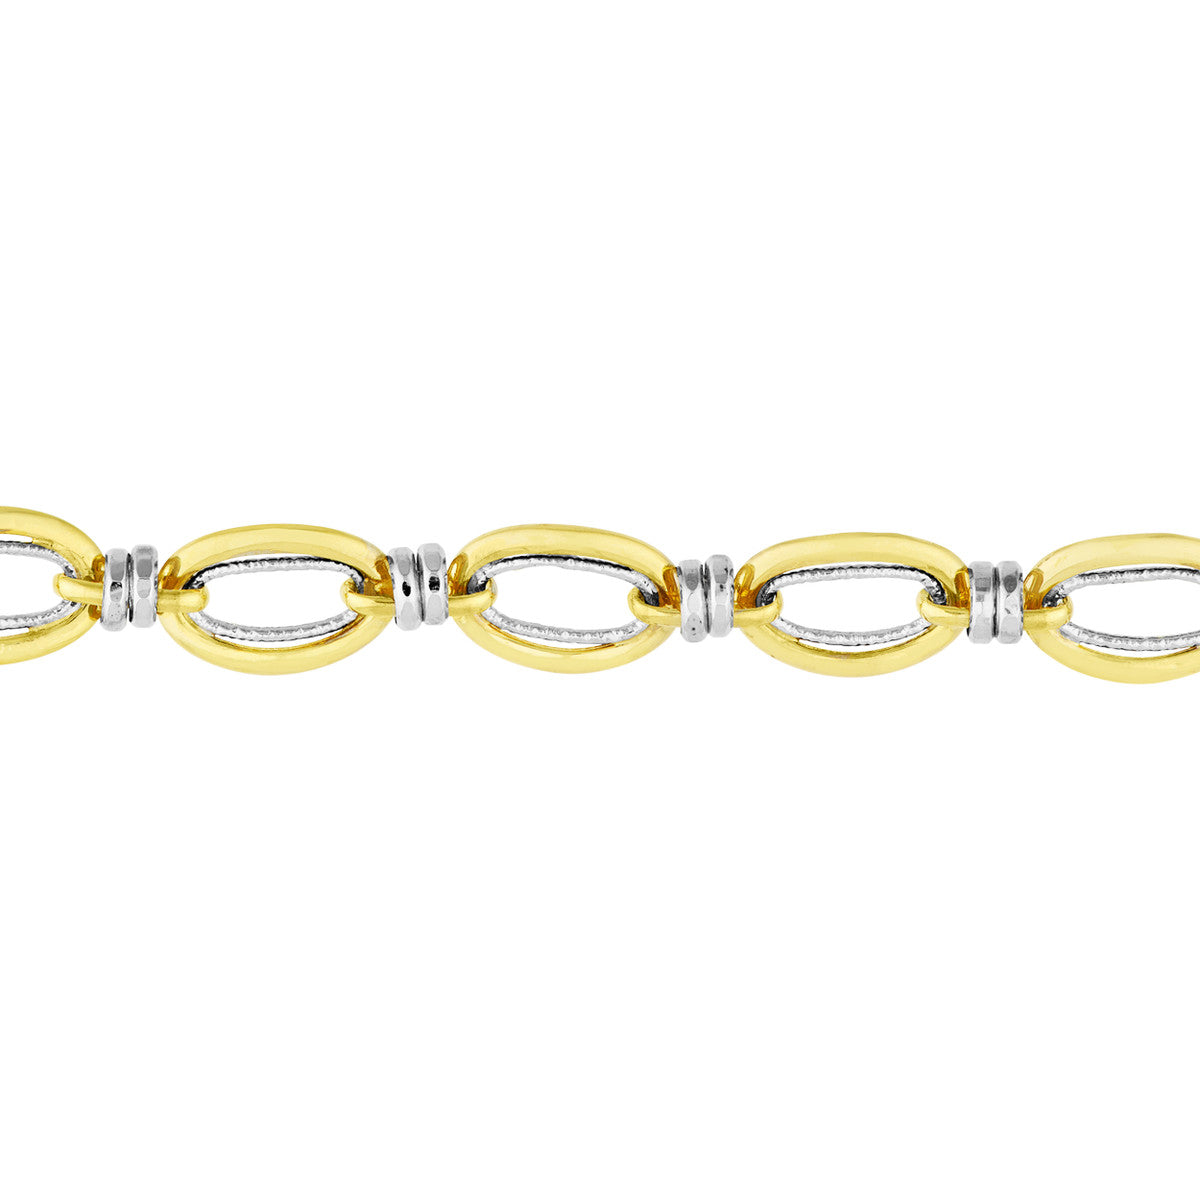 Two-Tone Polished Double Link Bracelet